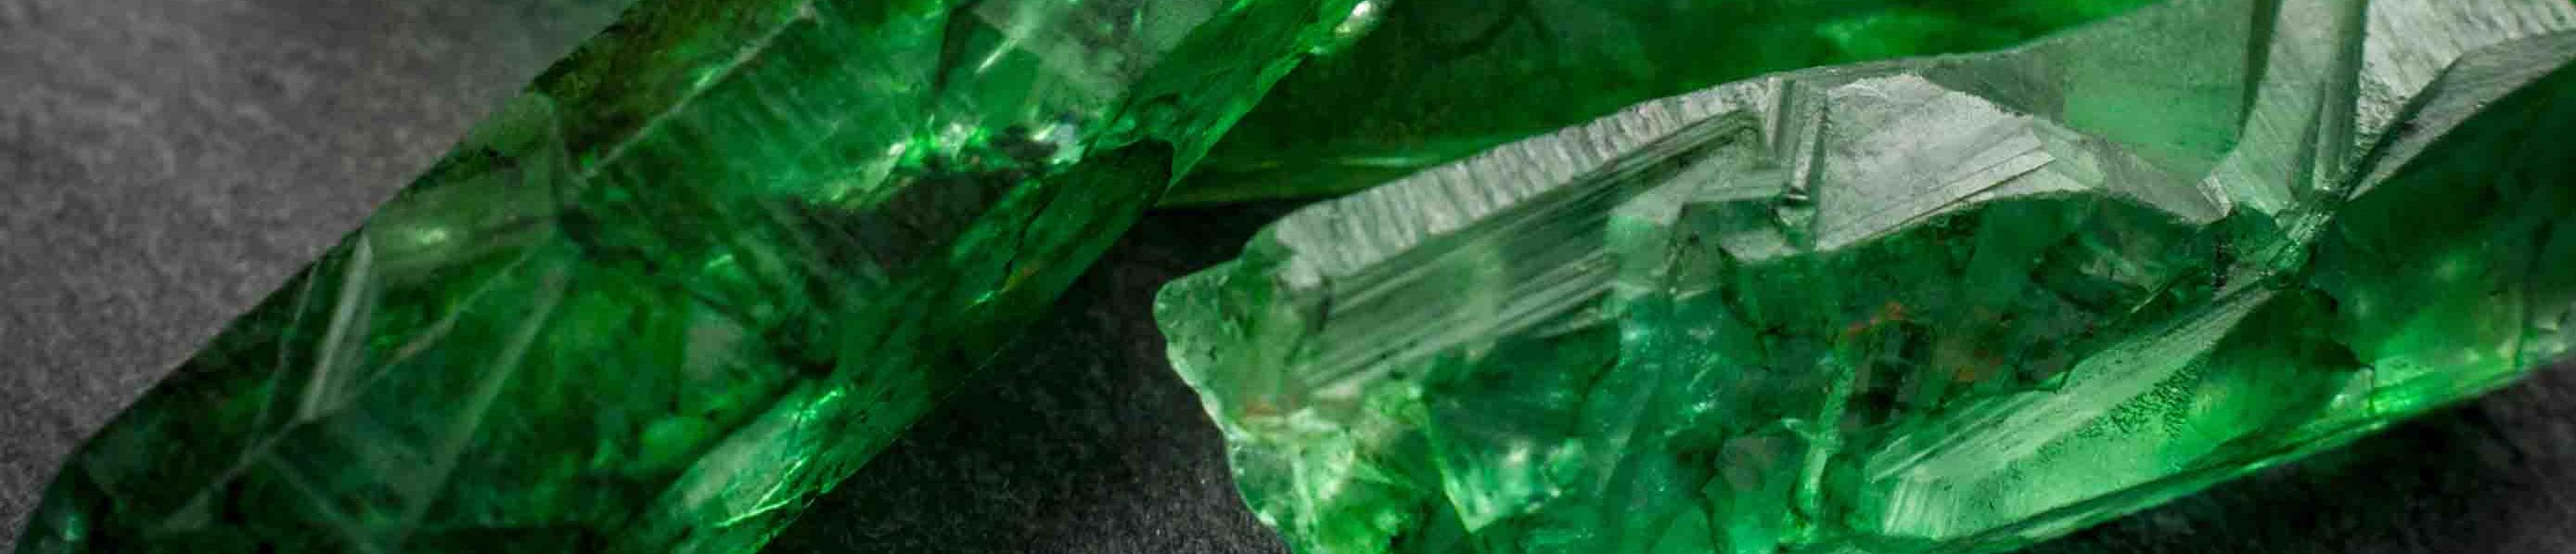 rough emeralds close up